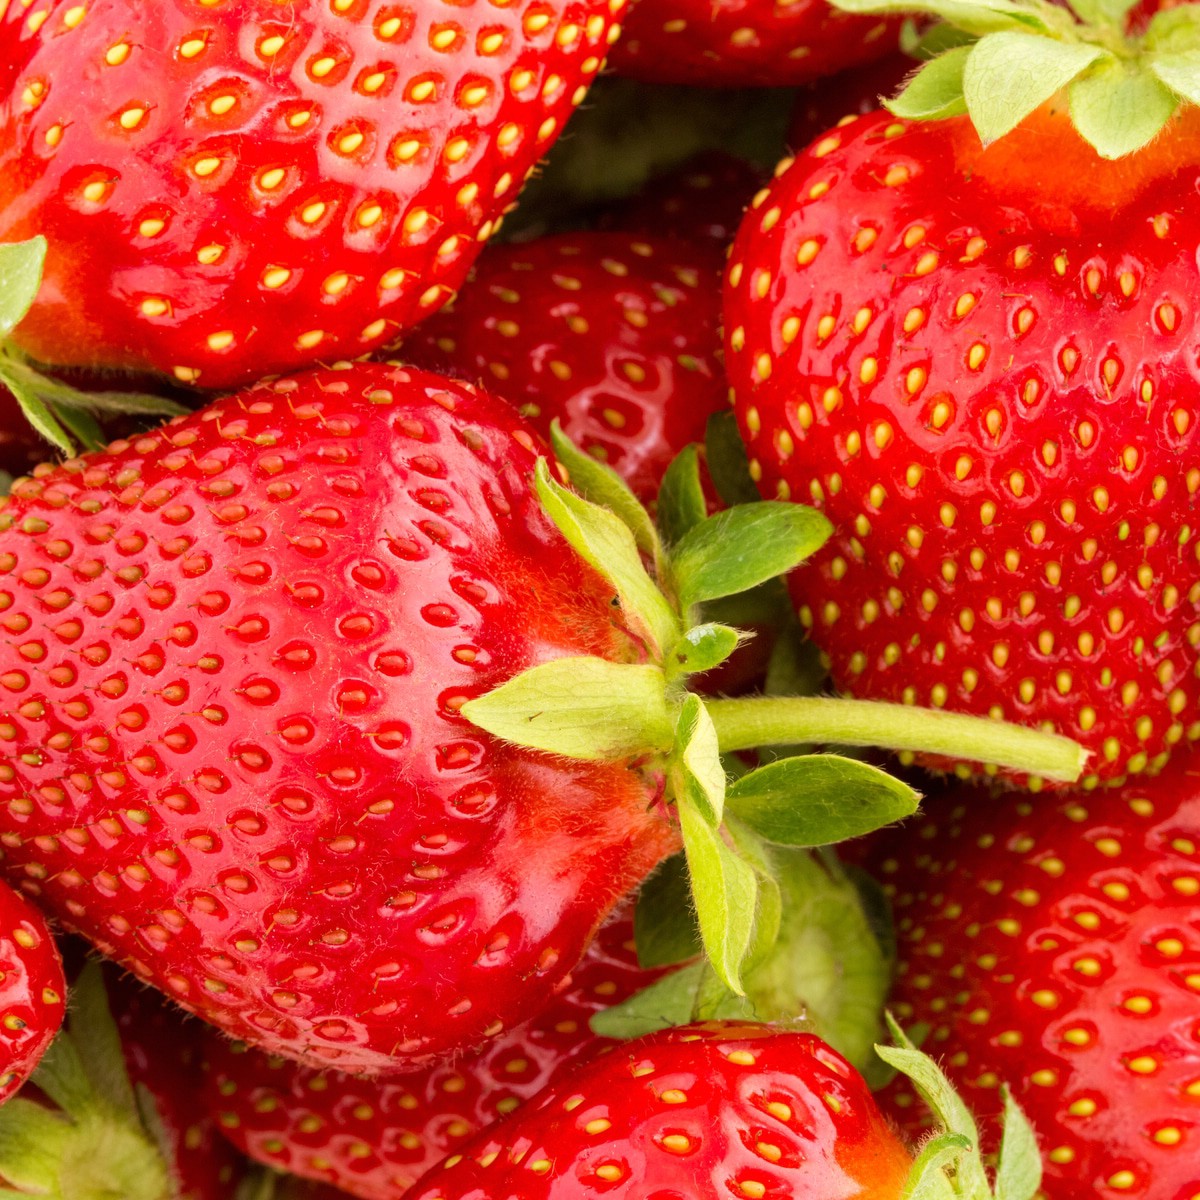 Ozark beauty strawberries.